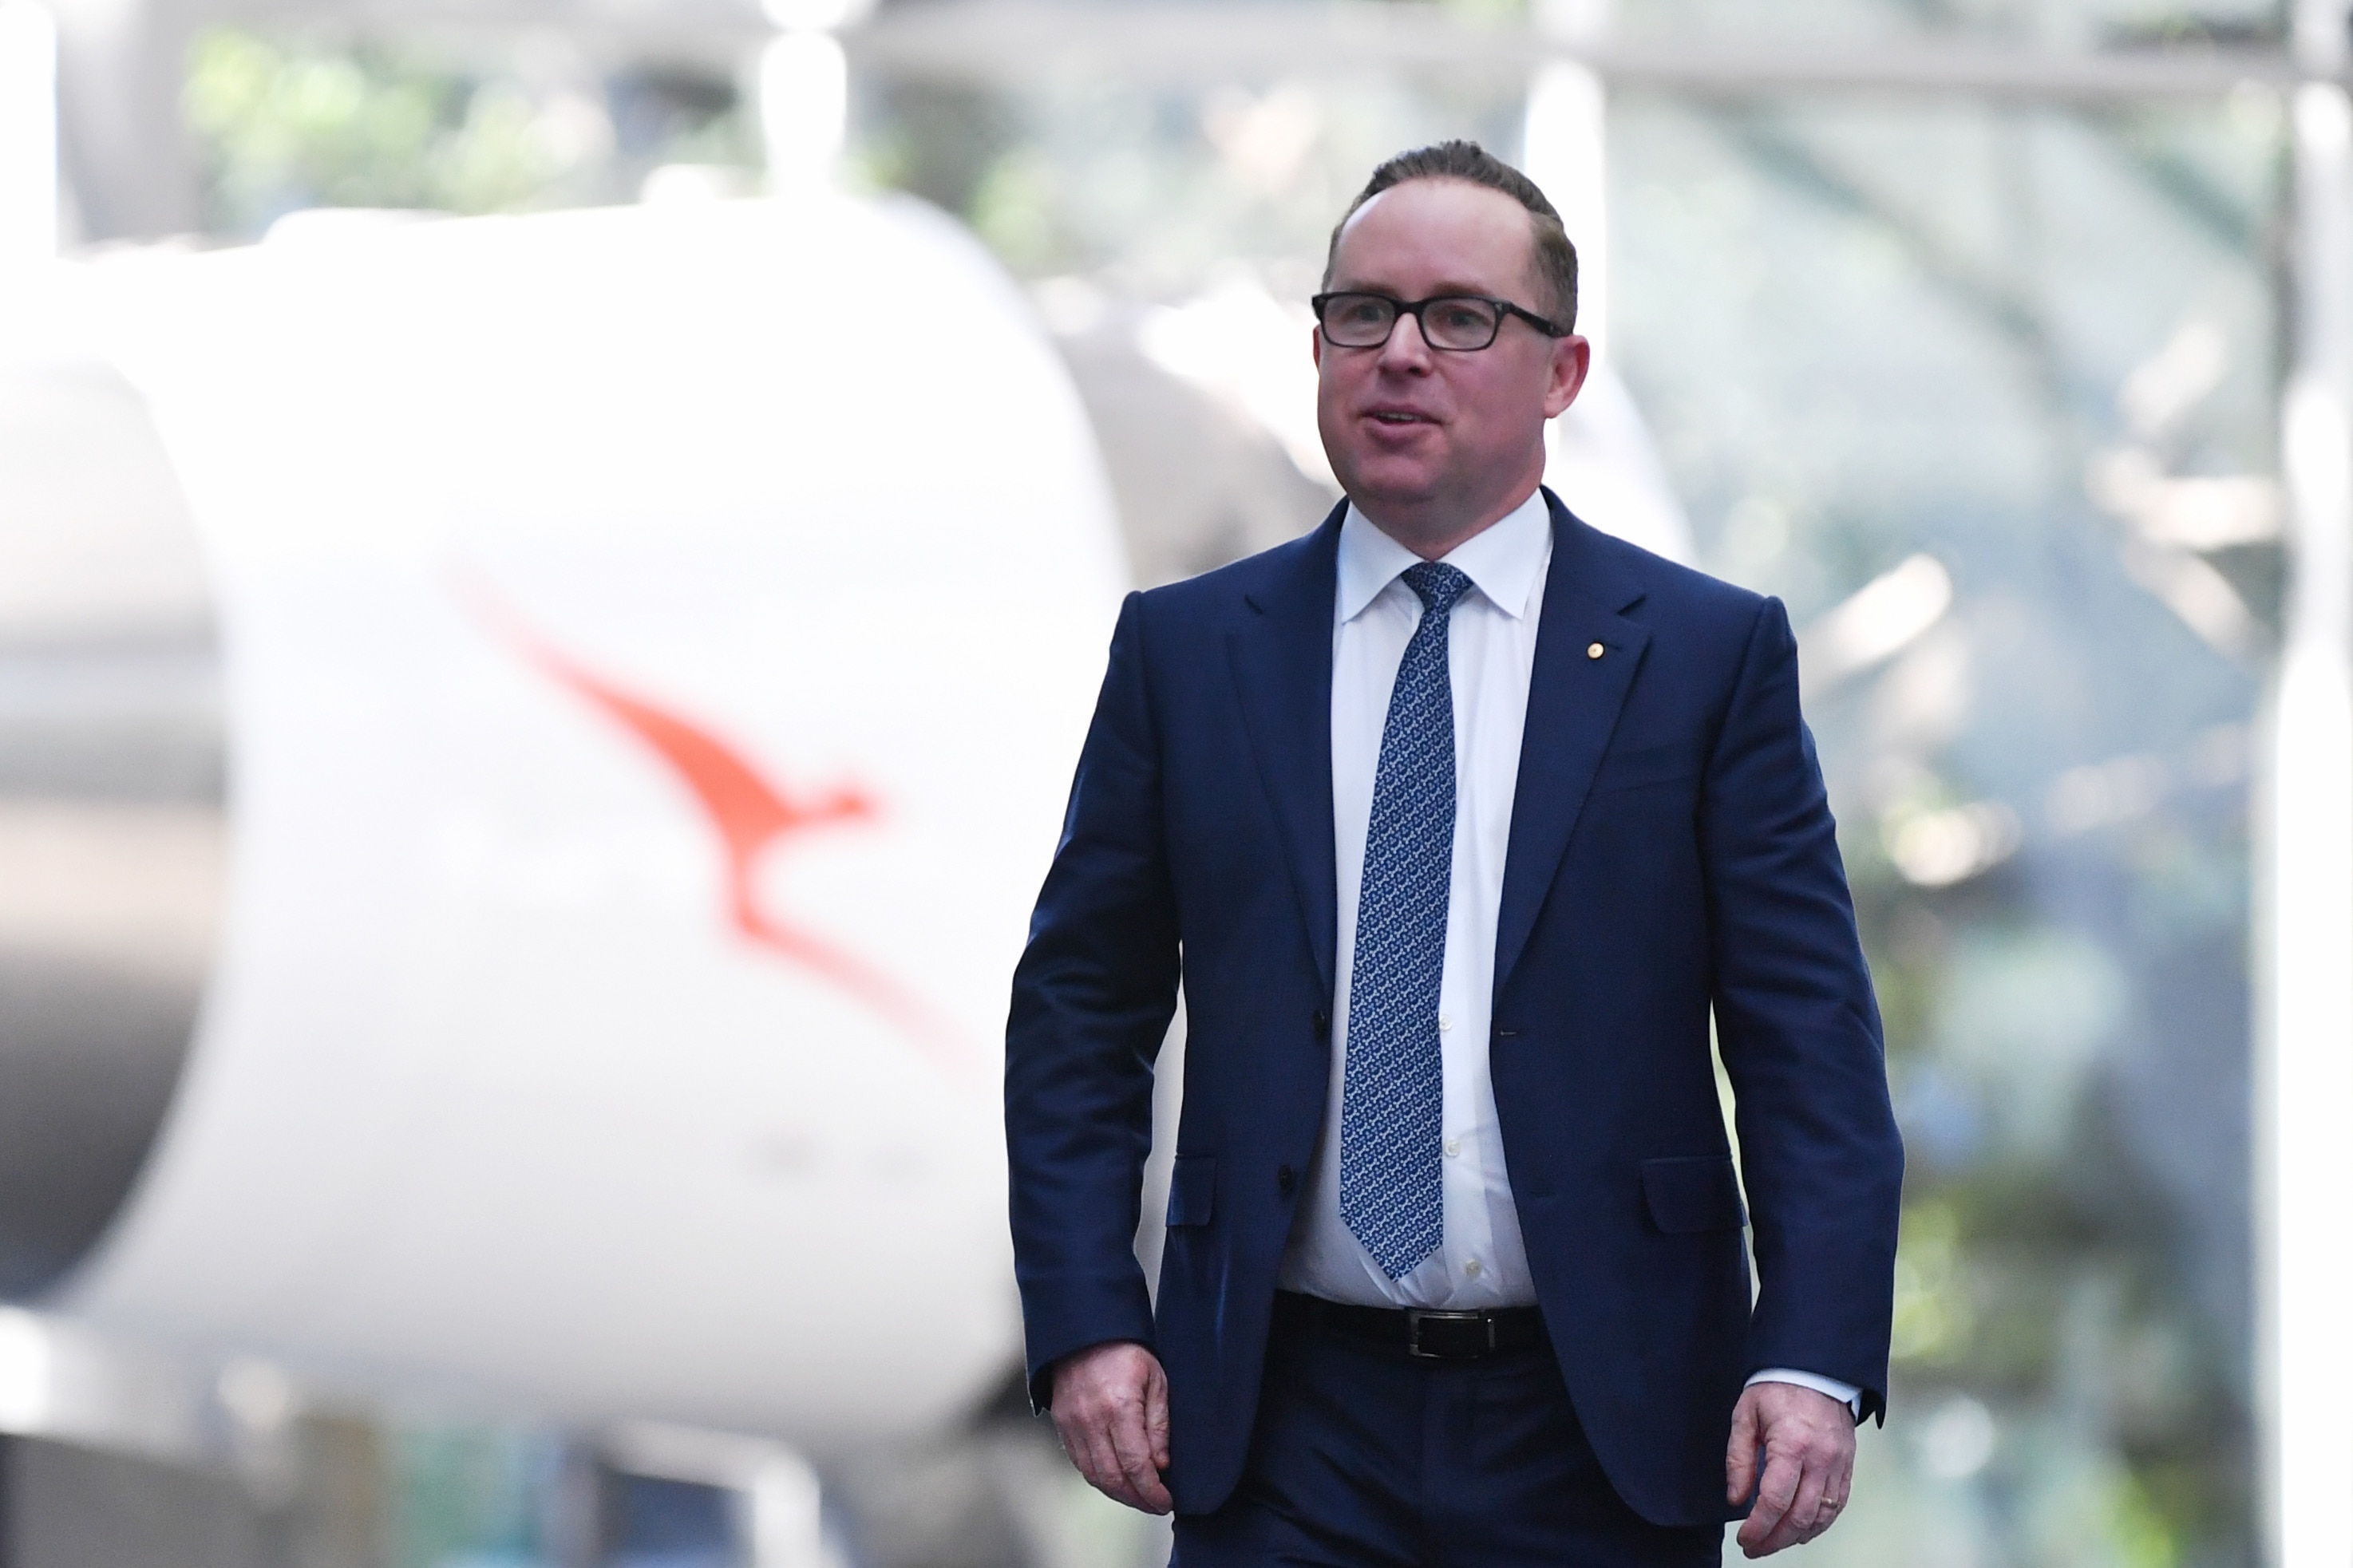 Qantas CEO Alan Joyce Qantas says international flights would not resume until mid-2021.